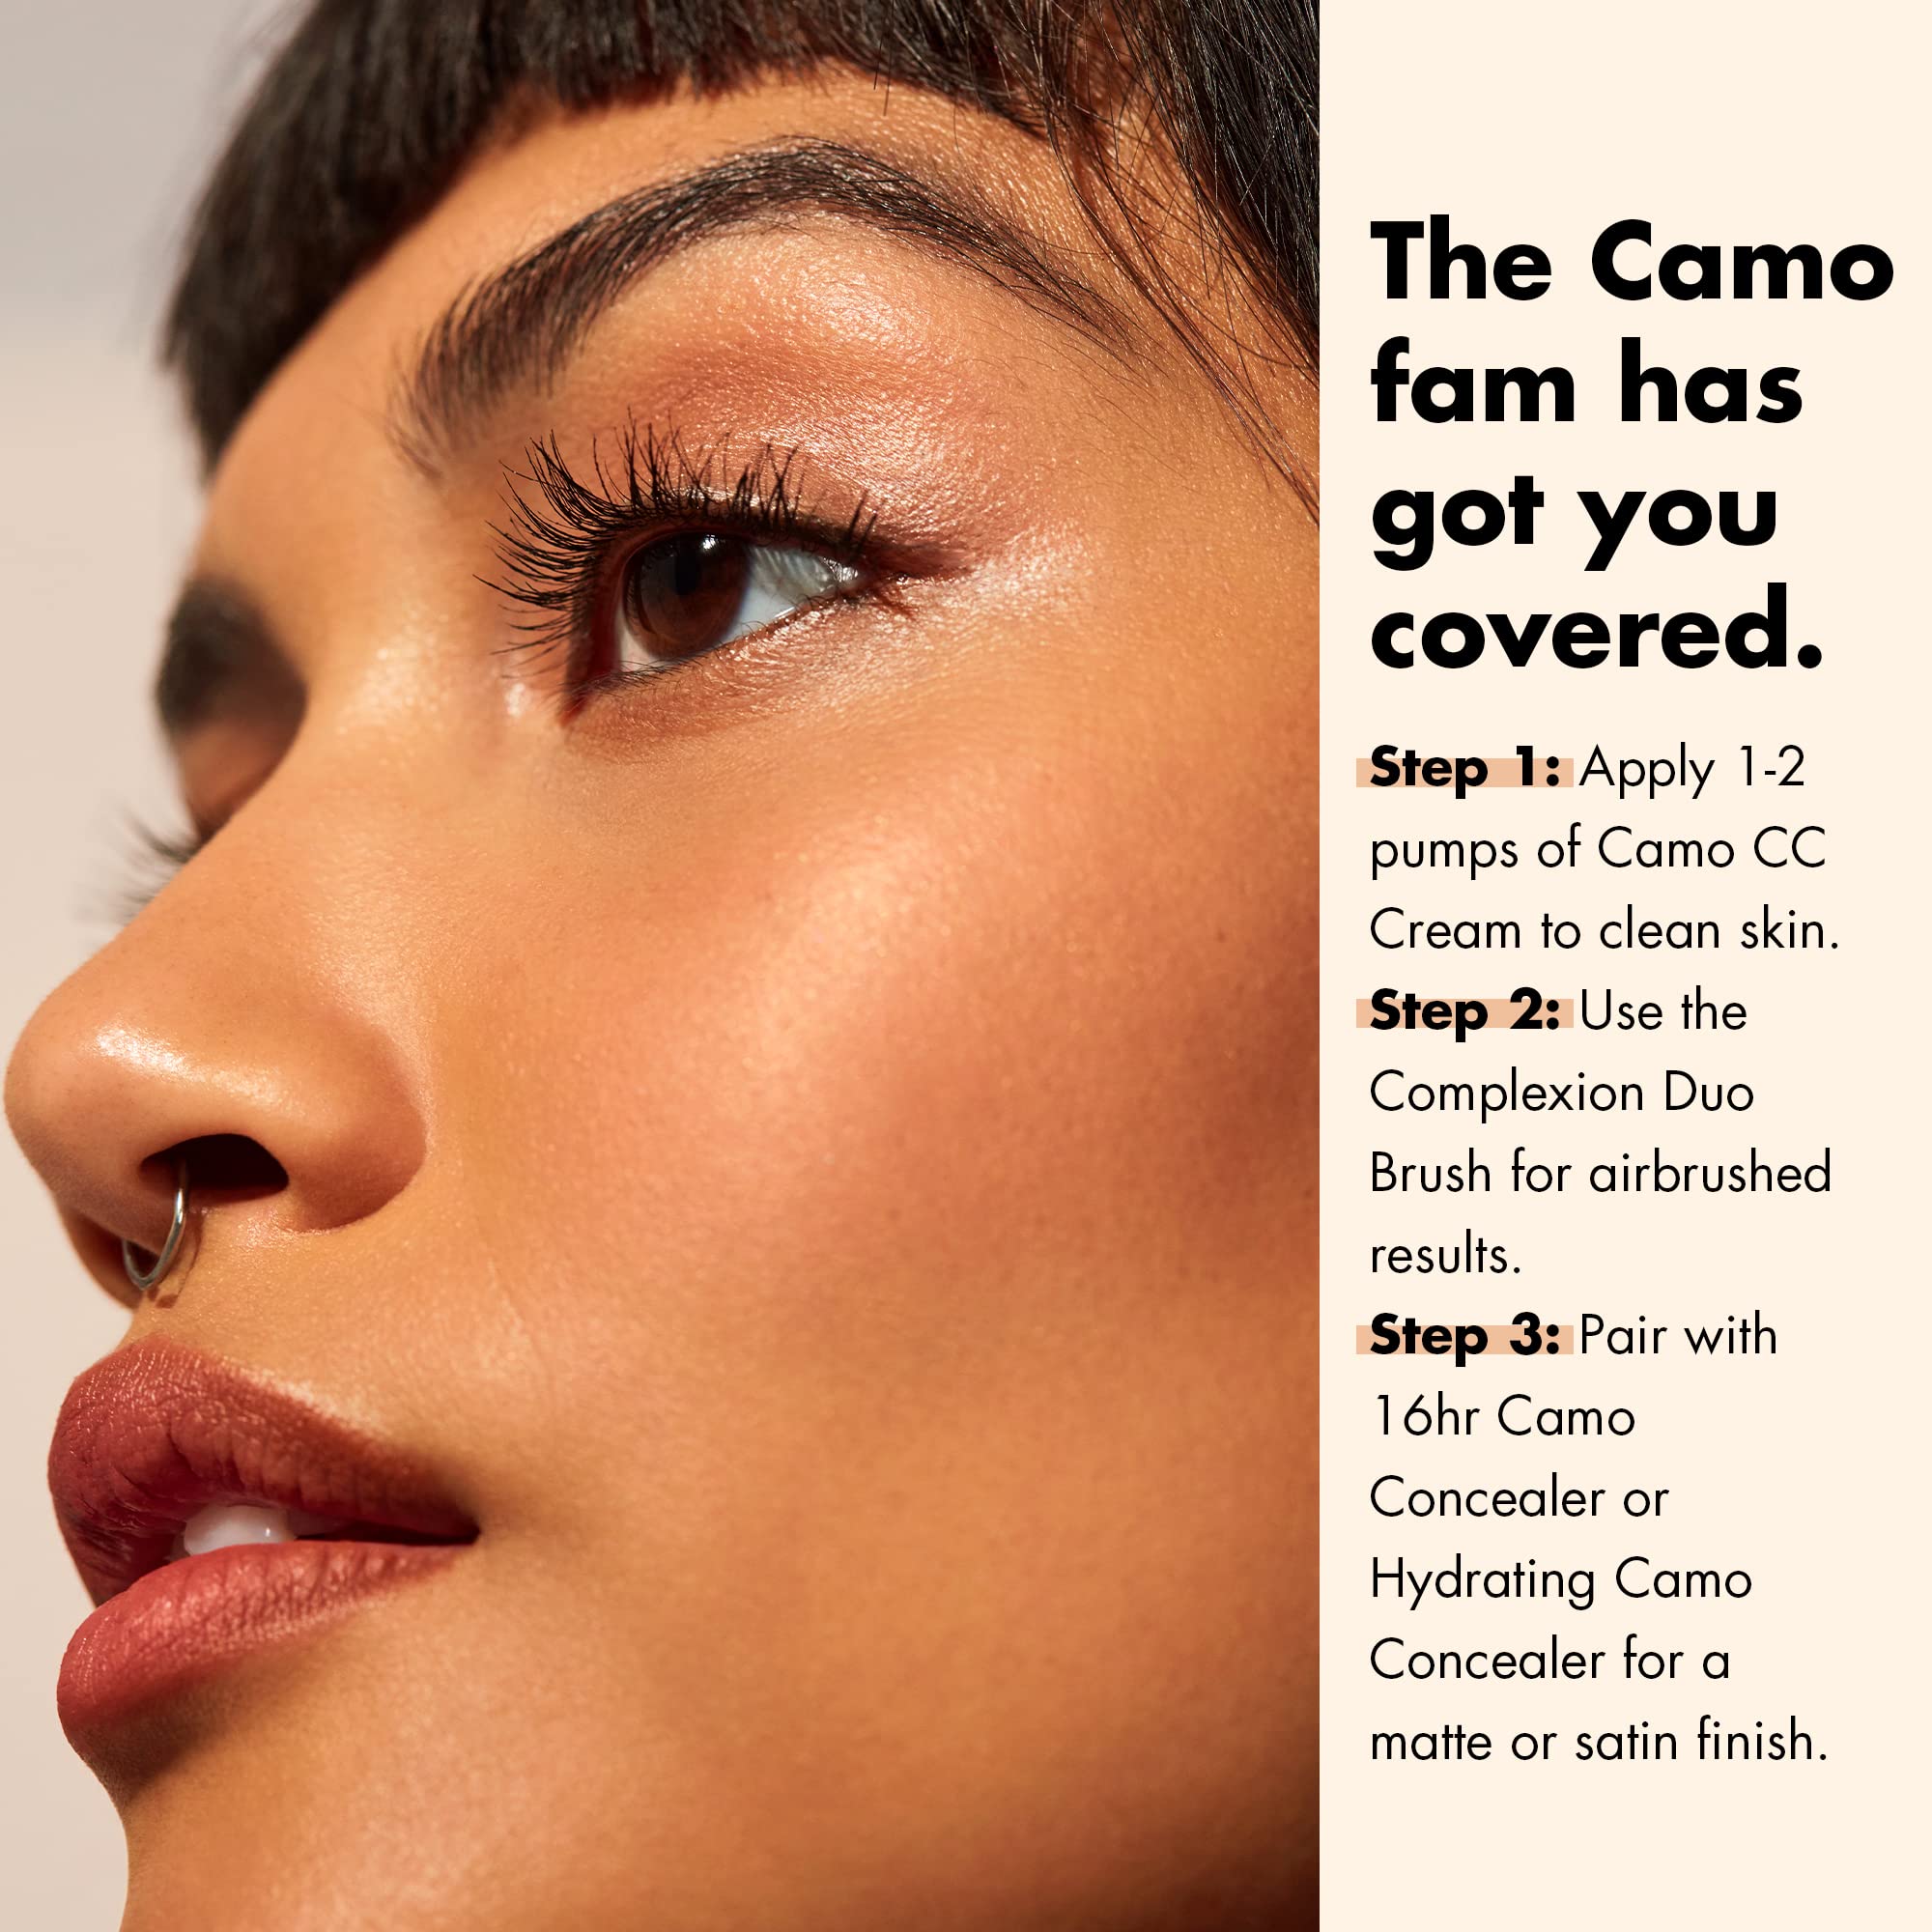 e.l.f. Camo CC Cream, Color Correcting Medium-To-Full Coverage Foundation with SPF 30, Fair 125 C, 1.05 Oz (30g)